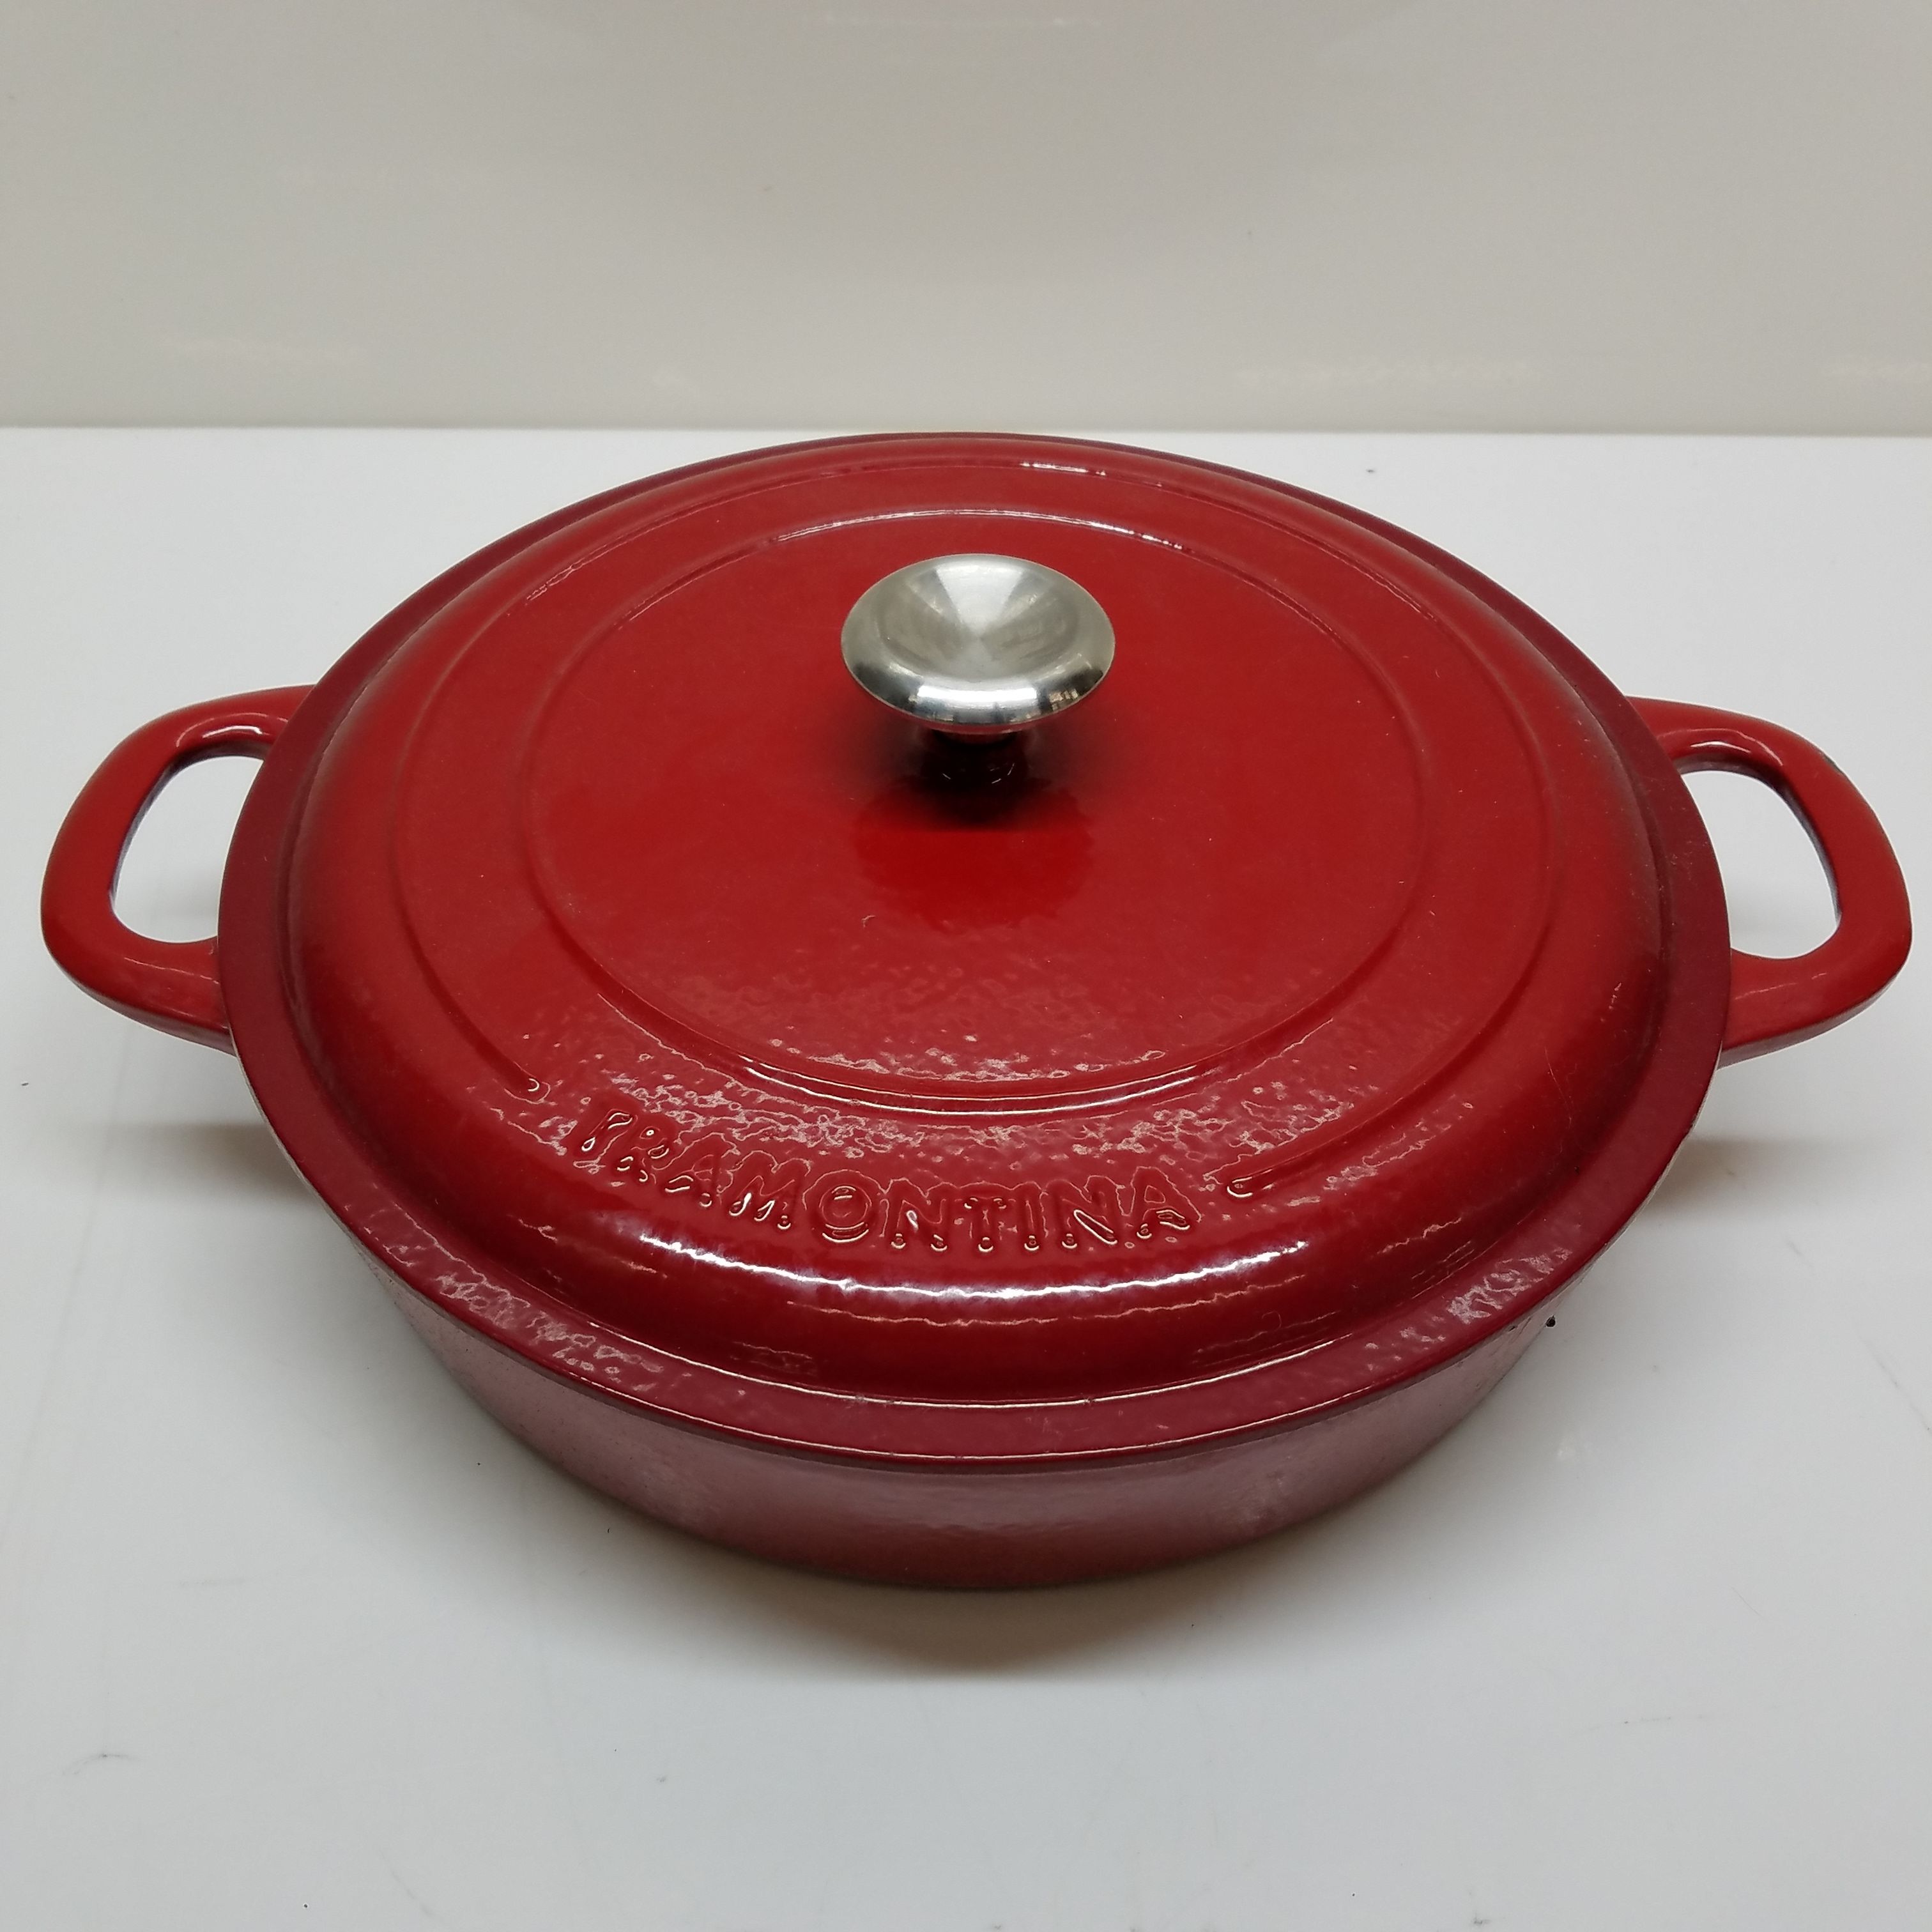 Tramontina Gourmet Covered Cast Iron Braiser - Gradated Red, 4 qt